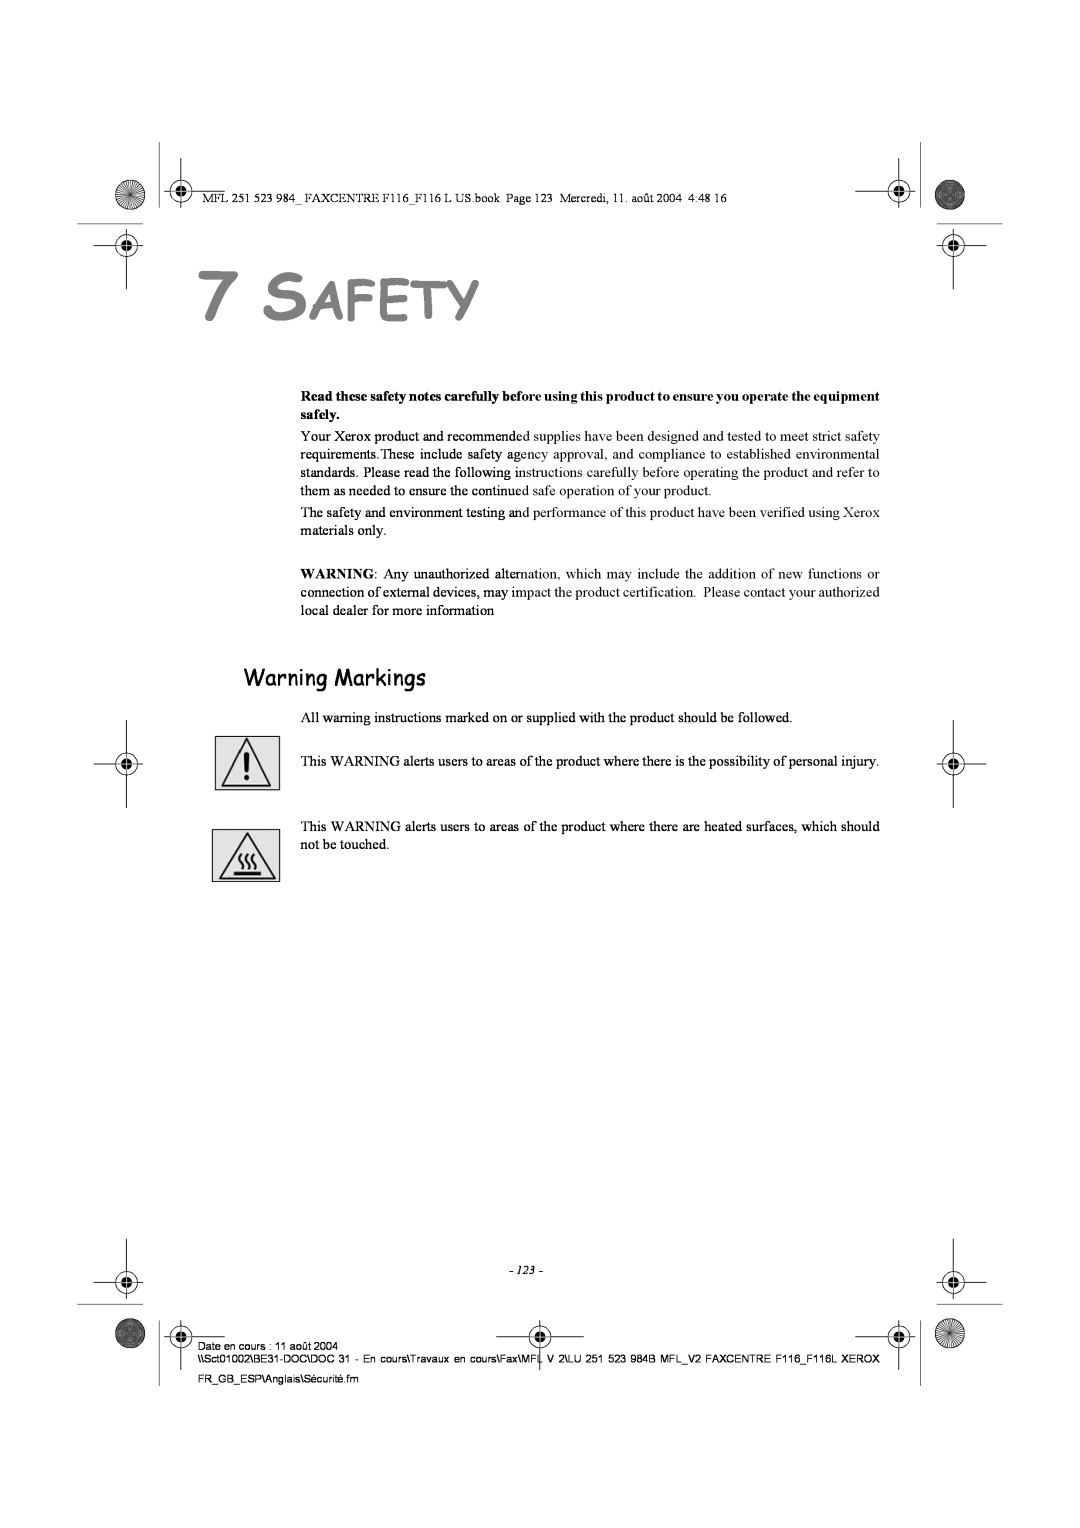 Xerox F116 user manual 7SAFETY, Warning Markings 